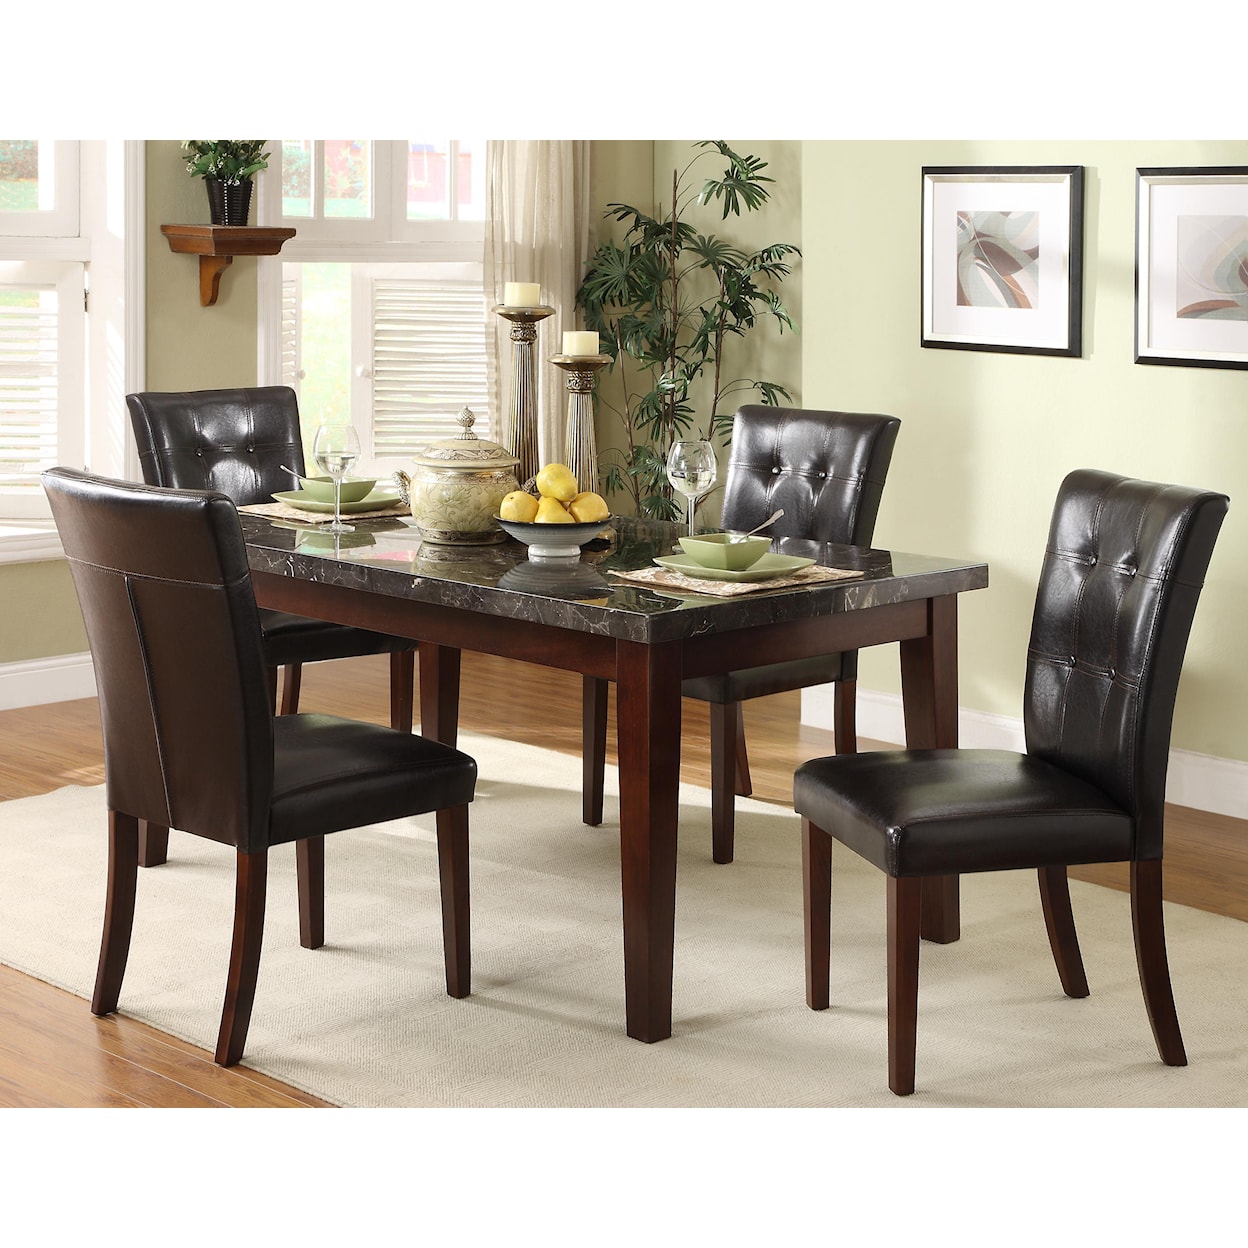 Homelegance Furniture Decatur Dining Table